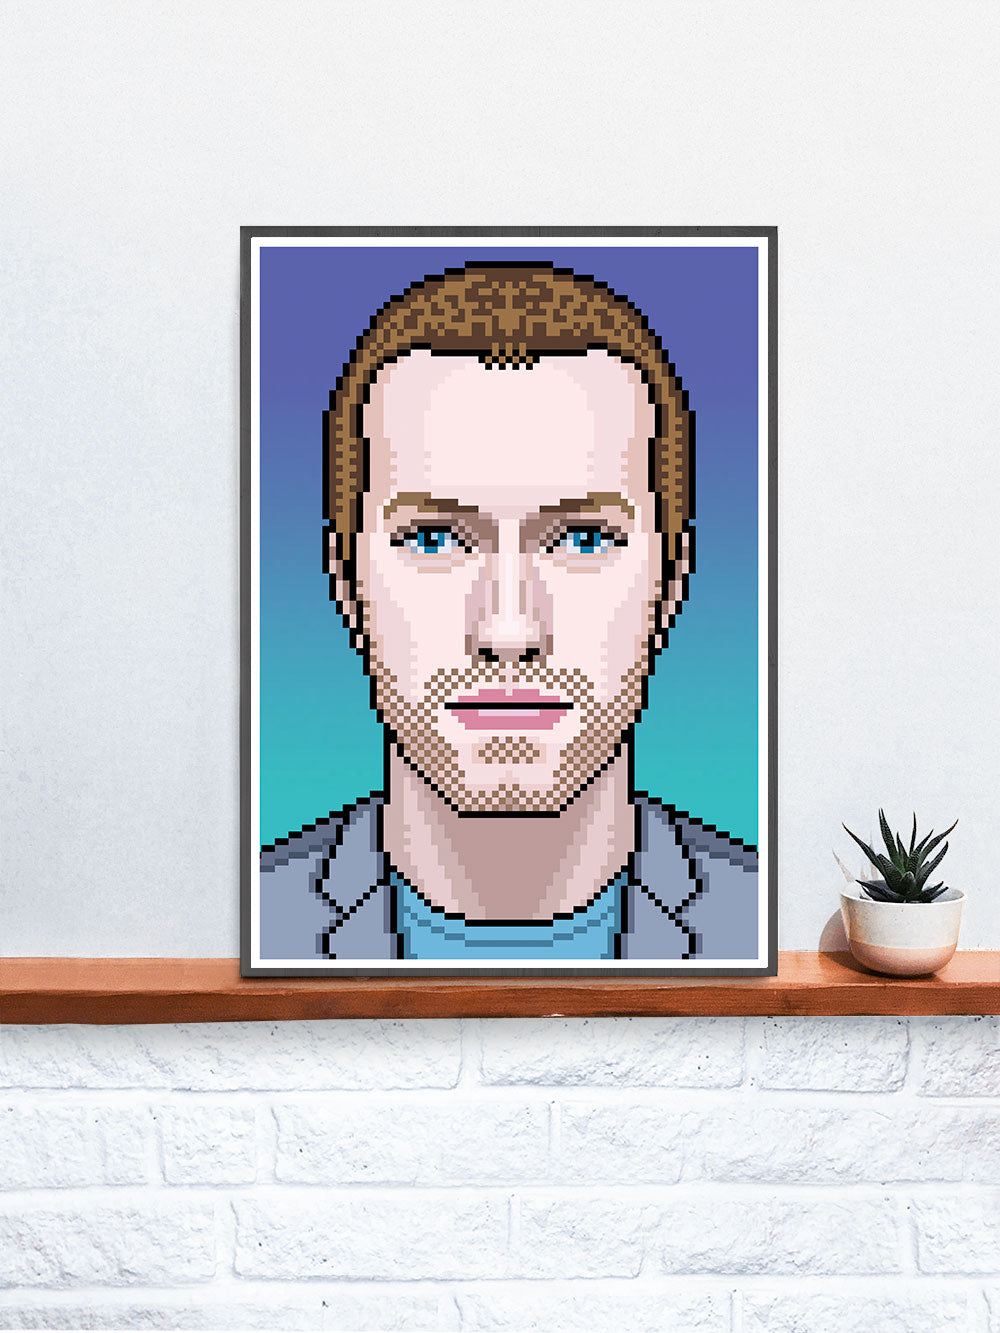 Chris Coldplay Art Print in a frame on a shelf